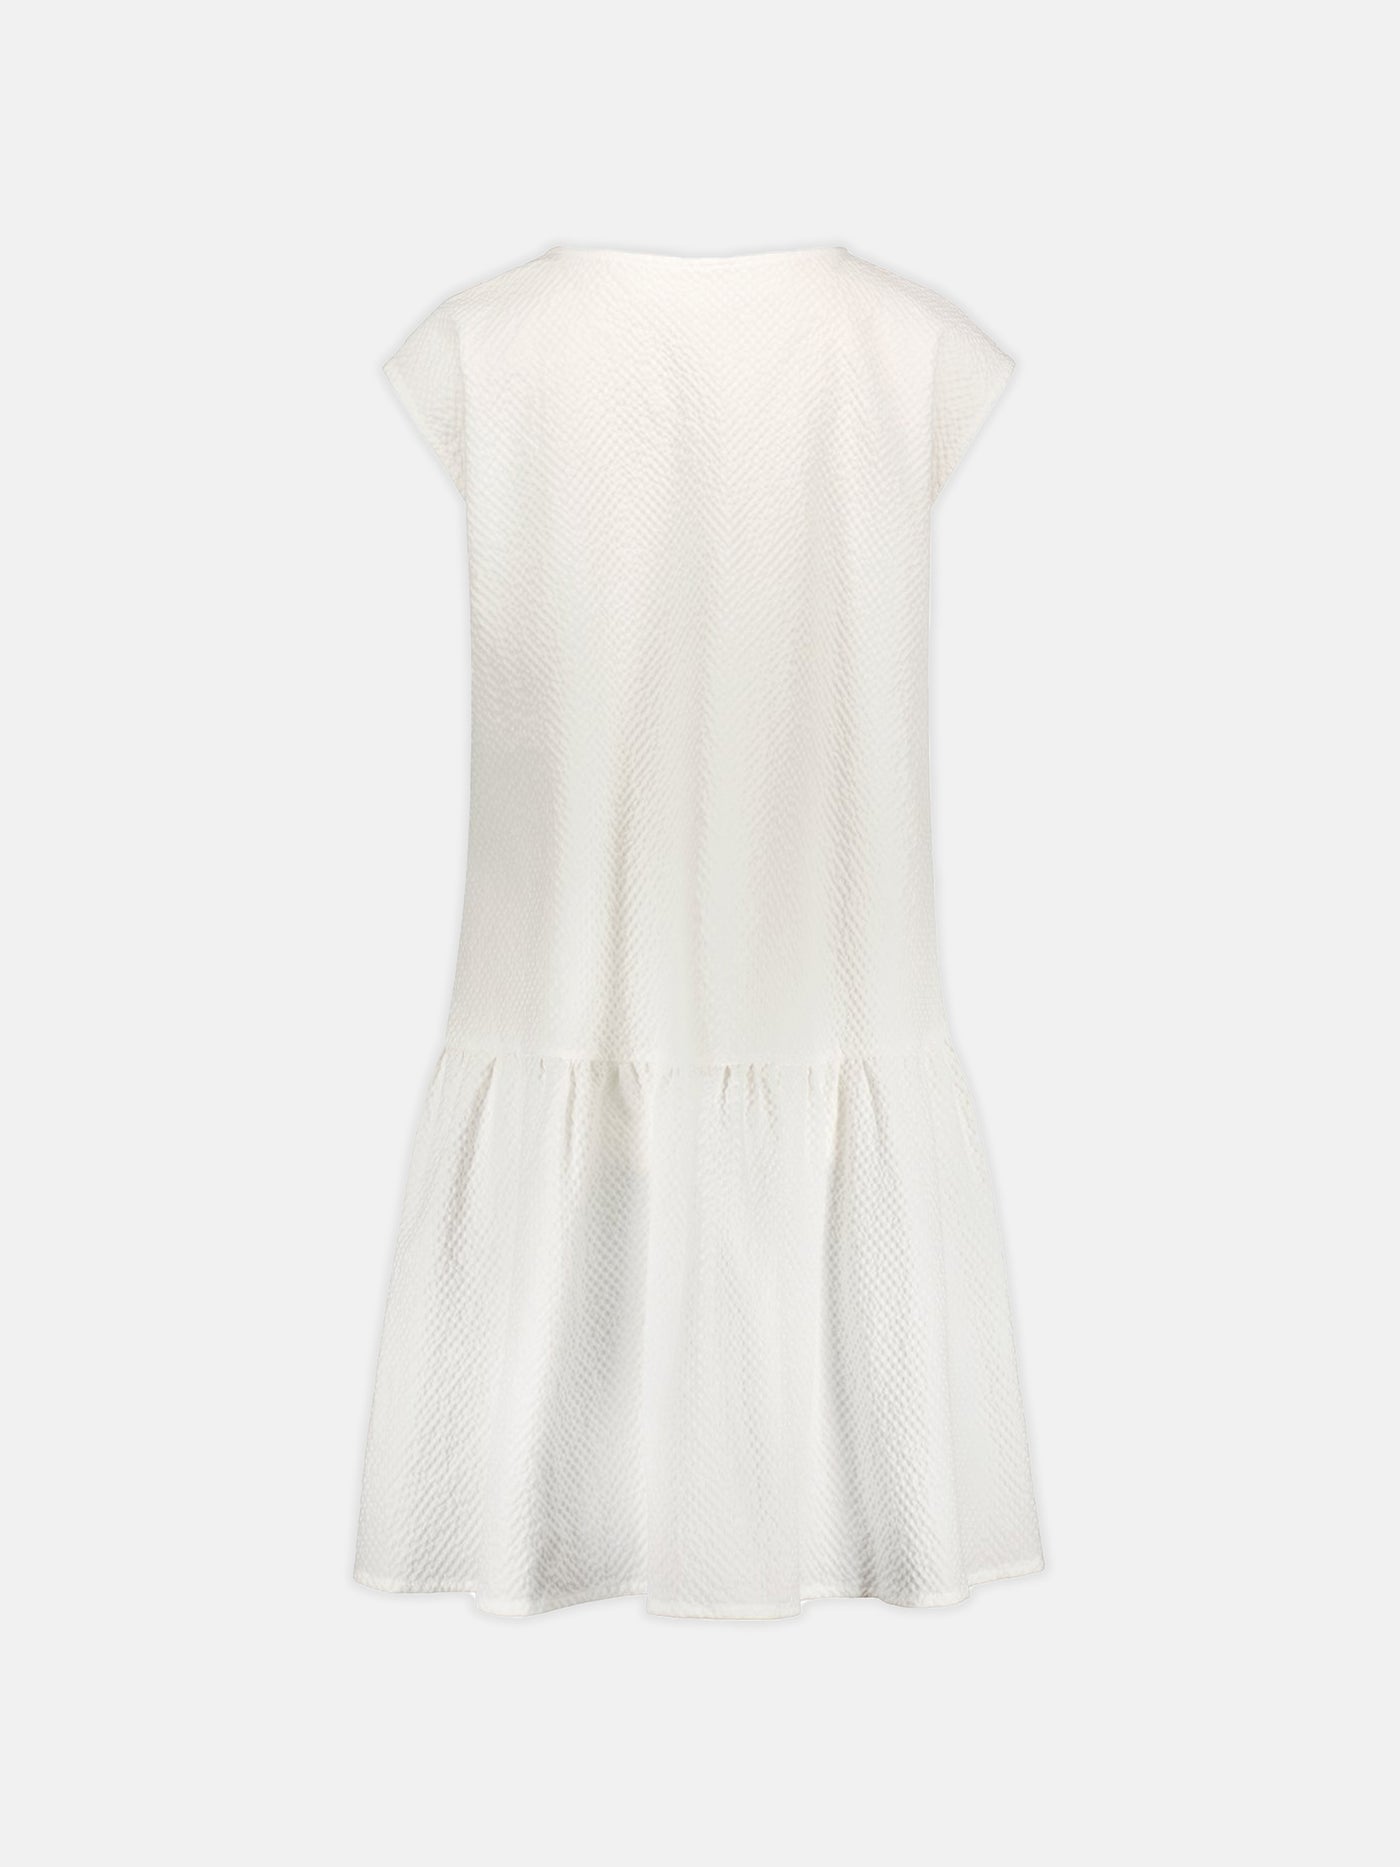 Paperbag dress, white